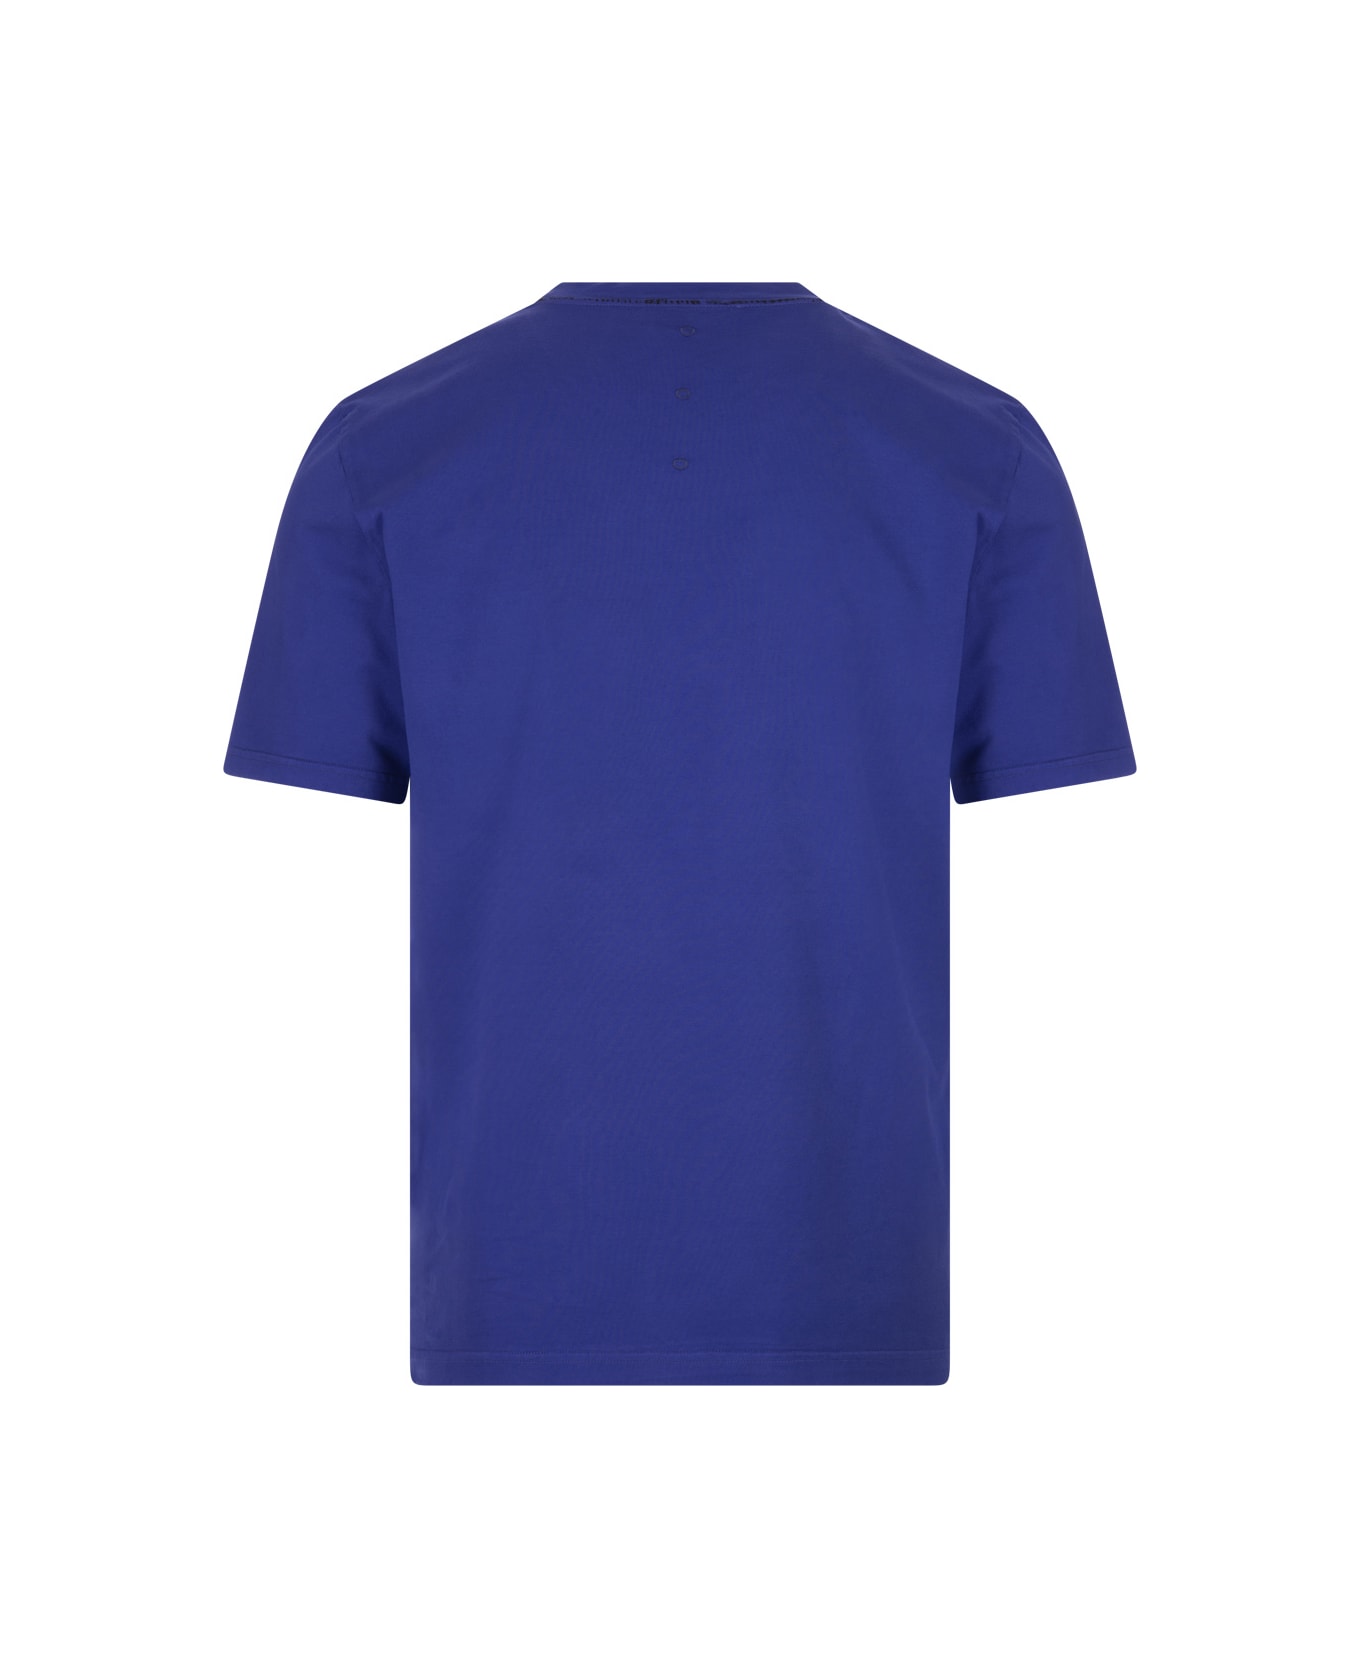 Premiata Blue T-shirt With Never White Print - Blue